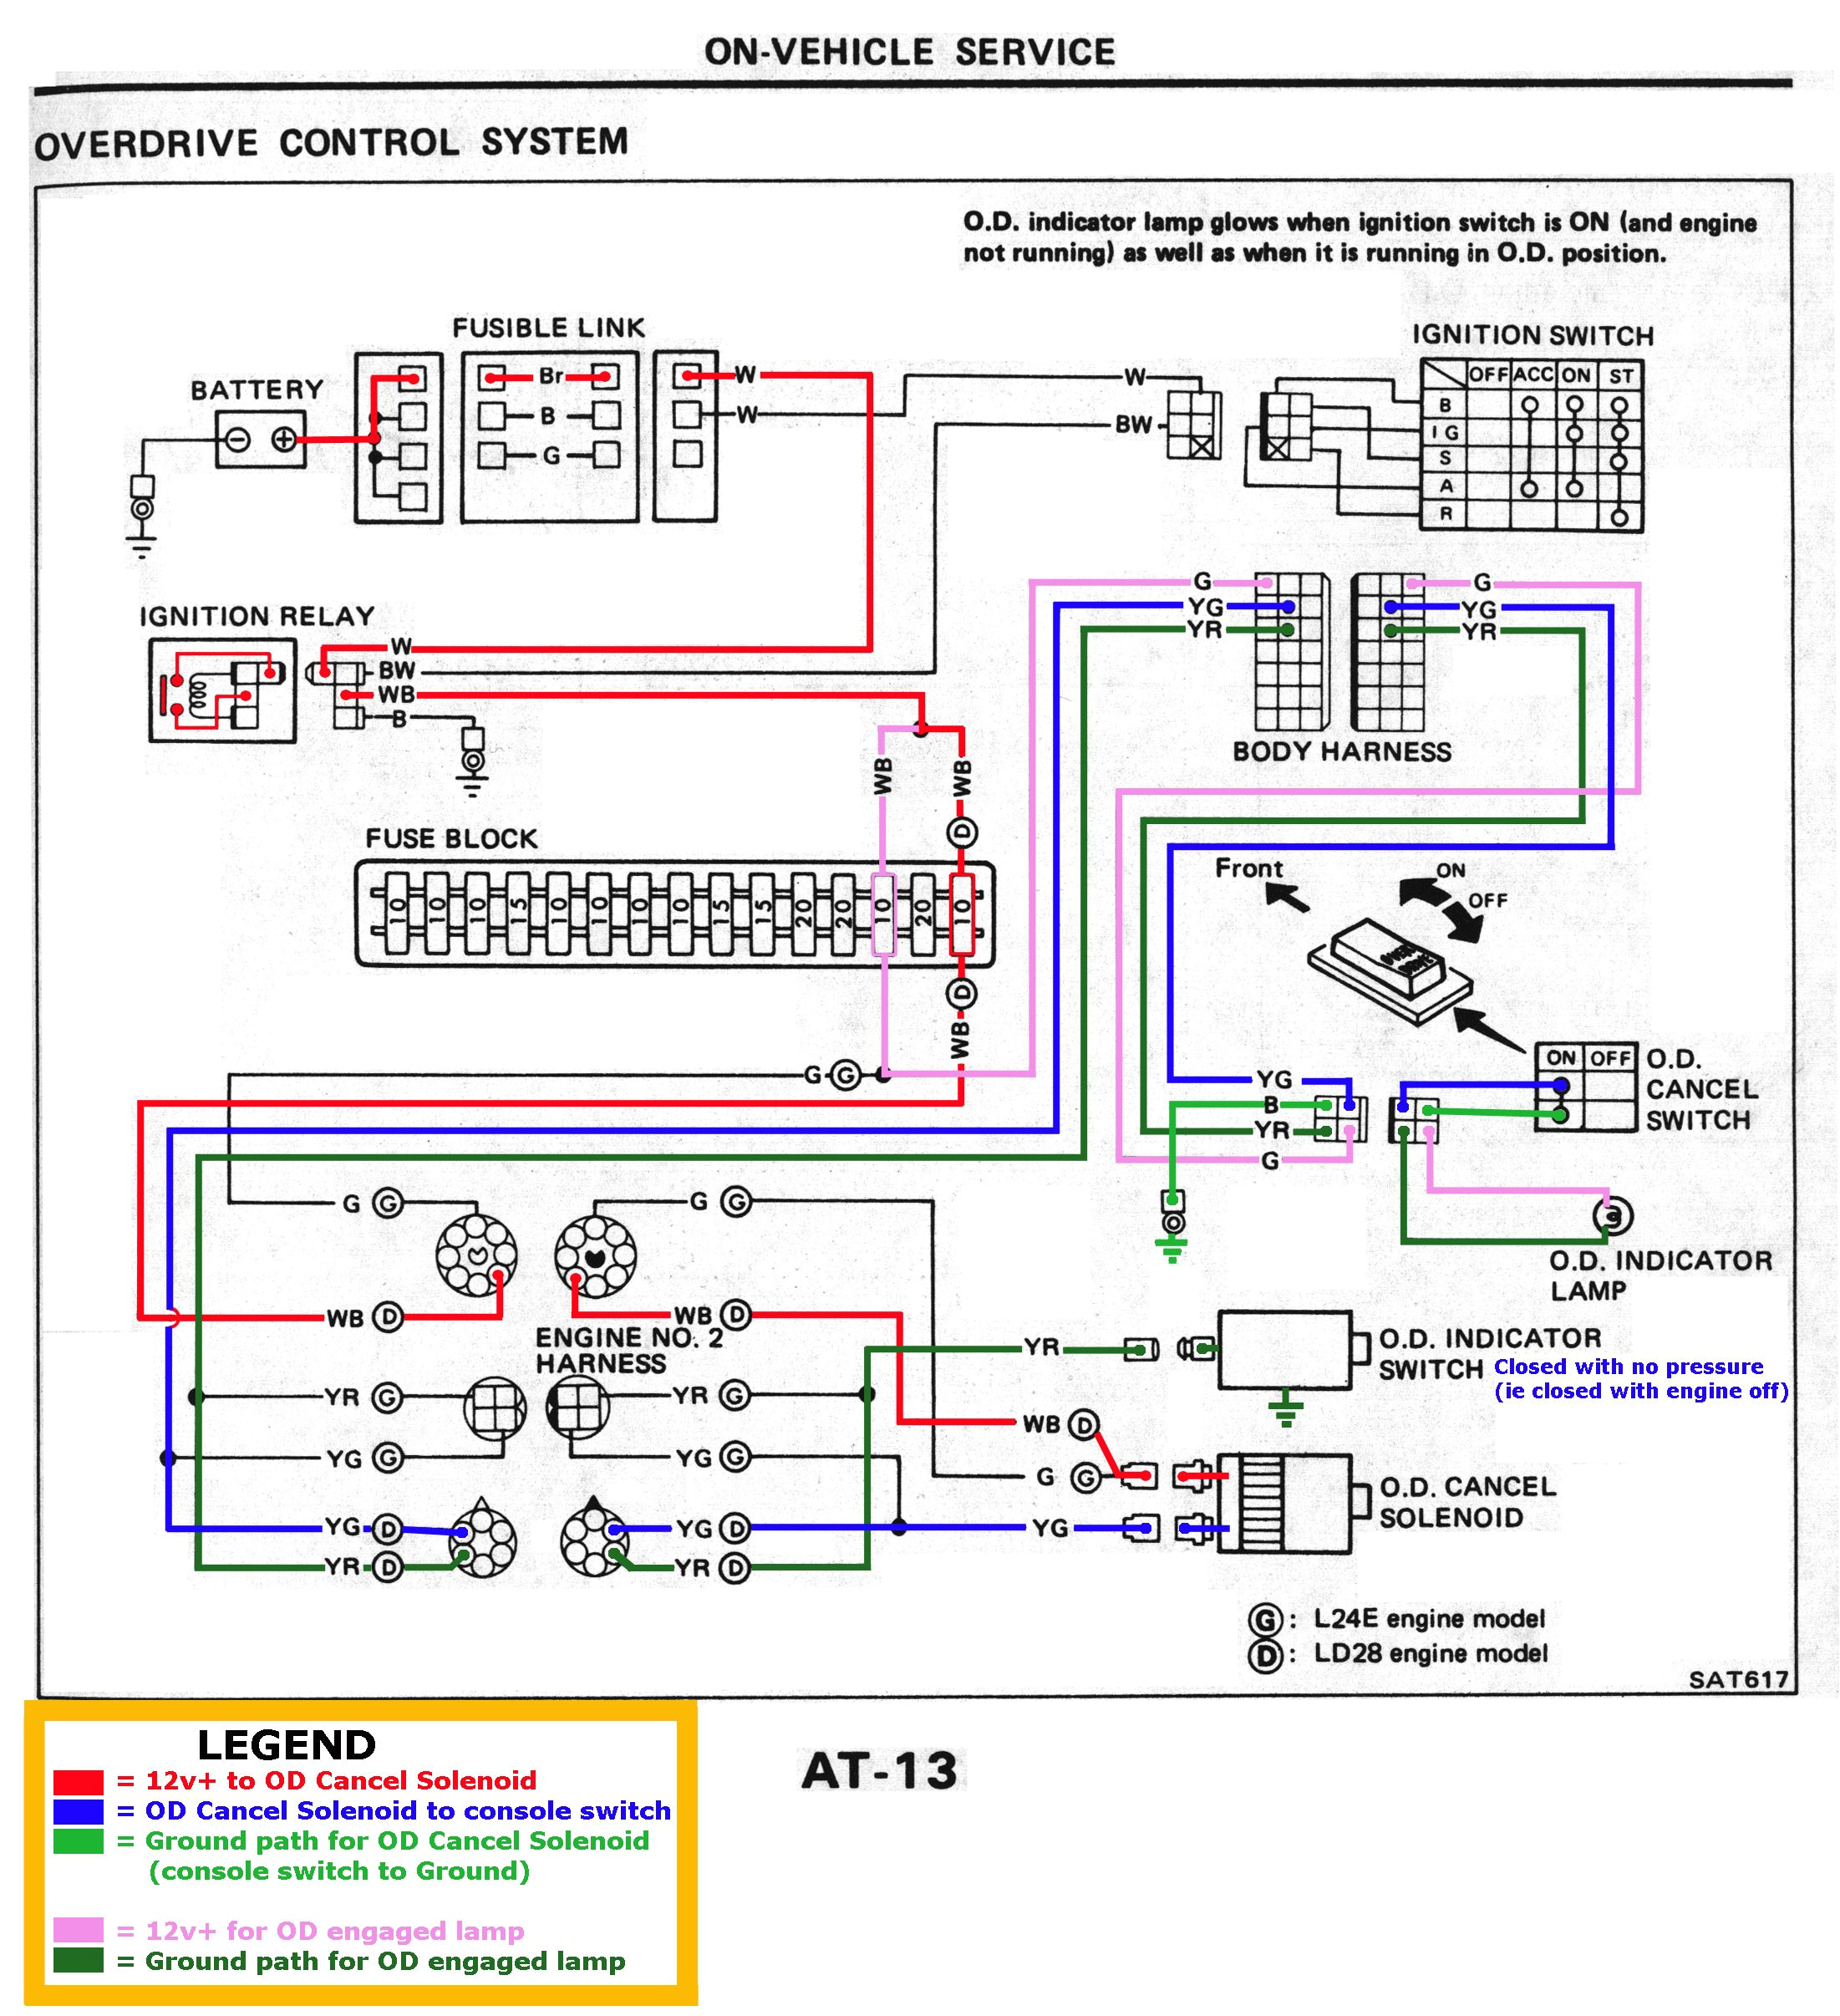 nissan navara d22 radio wiring diagram inspirational wiring diagram nissan navara d40 best maxxima light wiring diagram of nissan navara d22 radio wiring diagram jpg